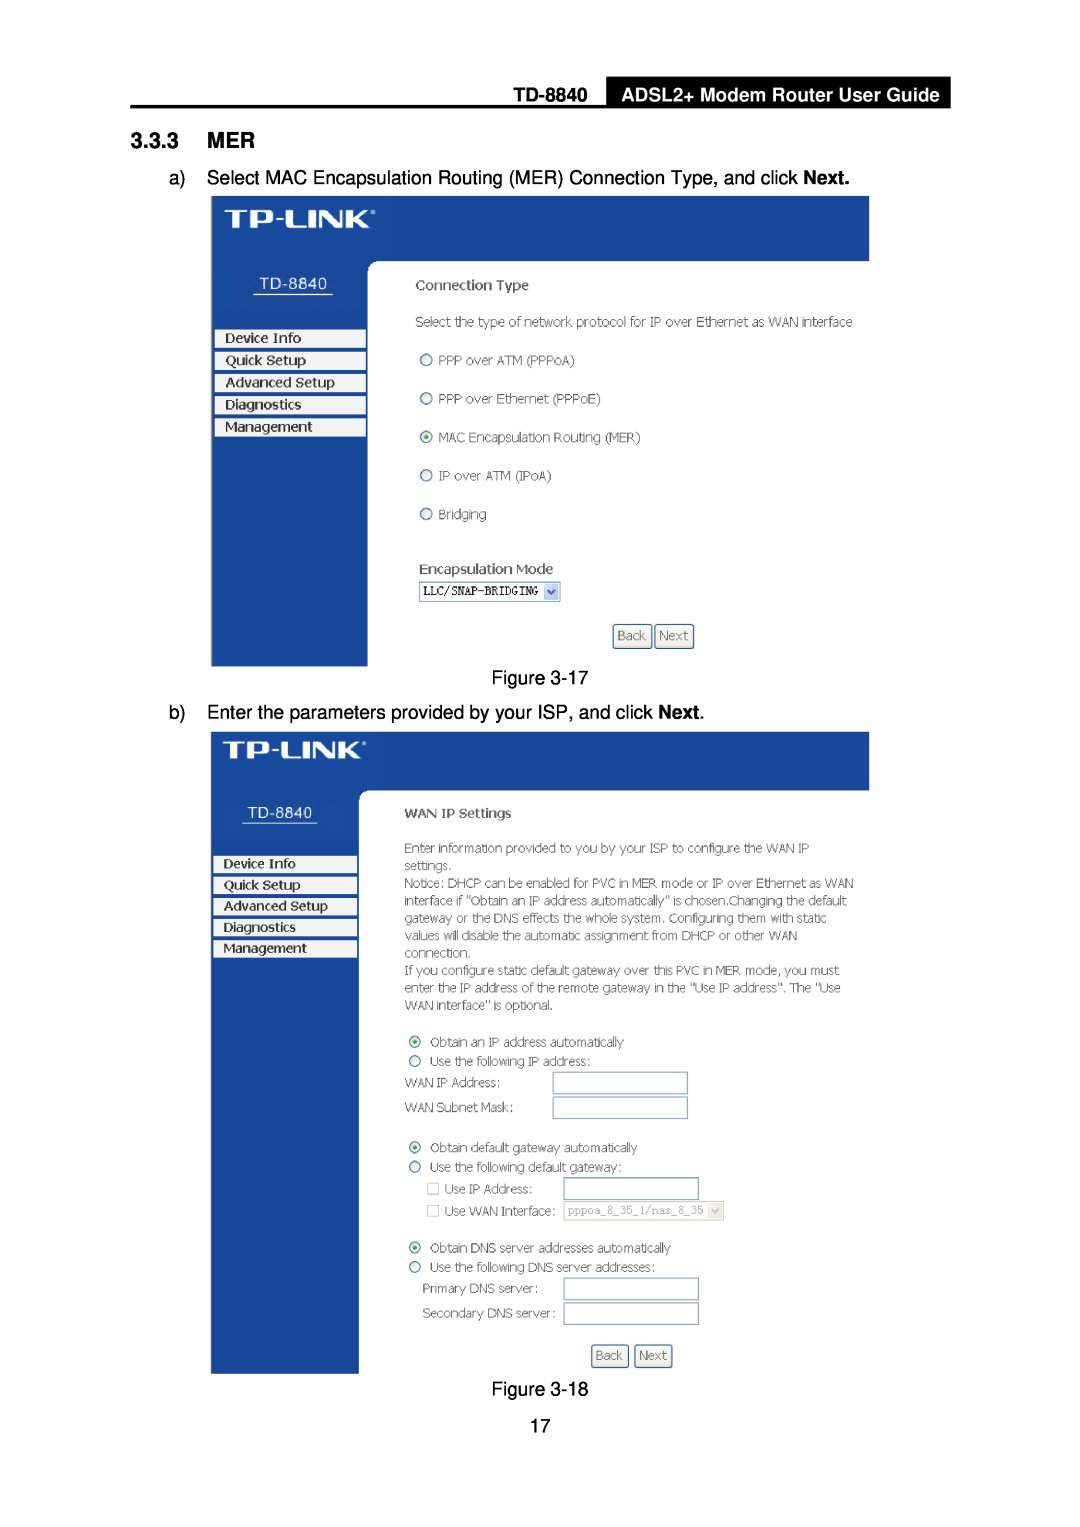 TP-Link TD-8840 manual 3.3.3MER, ADSL2+ Modem Router User Guide 